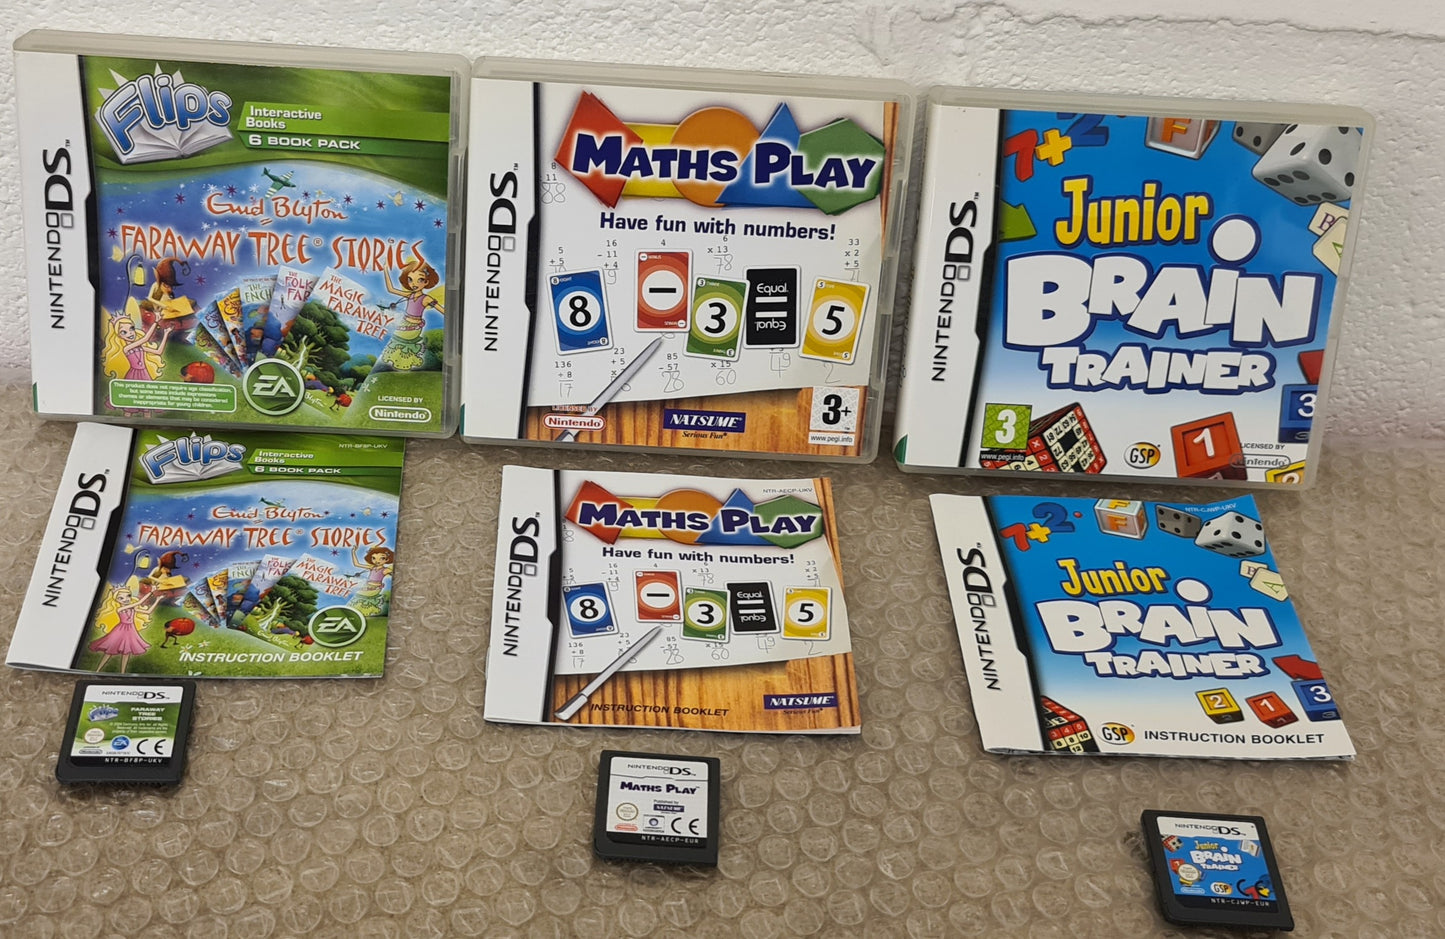 Tree Stories, Maths Play & Junior Brain Trainer Nintendo DS Game Bundle